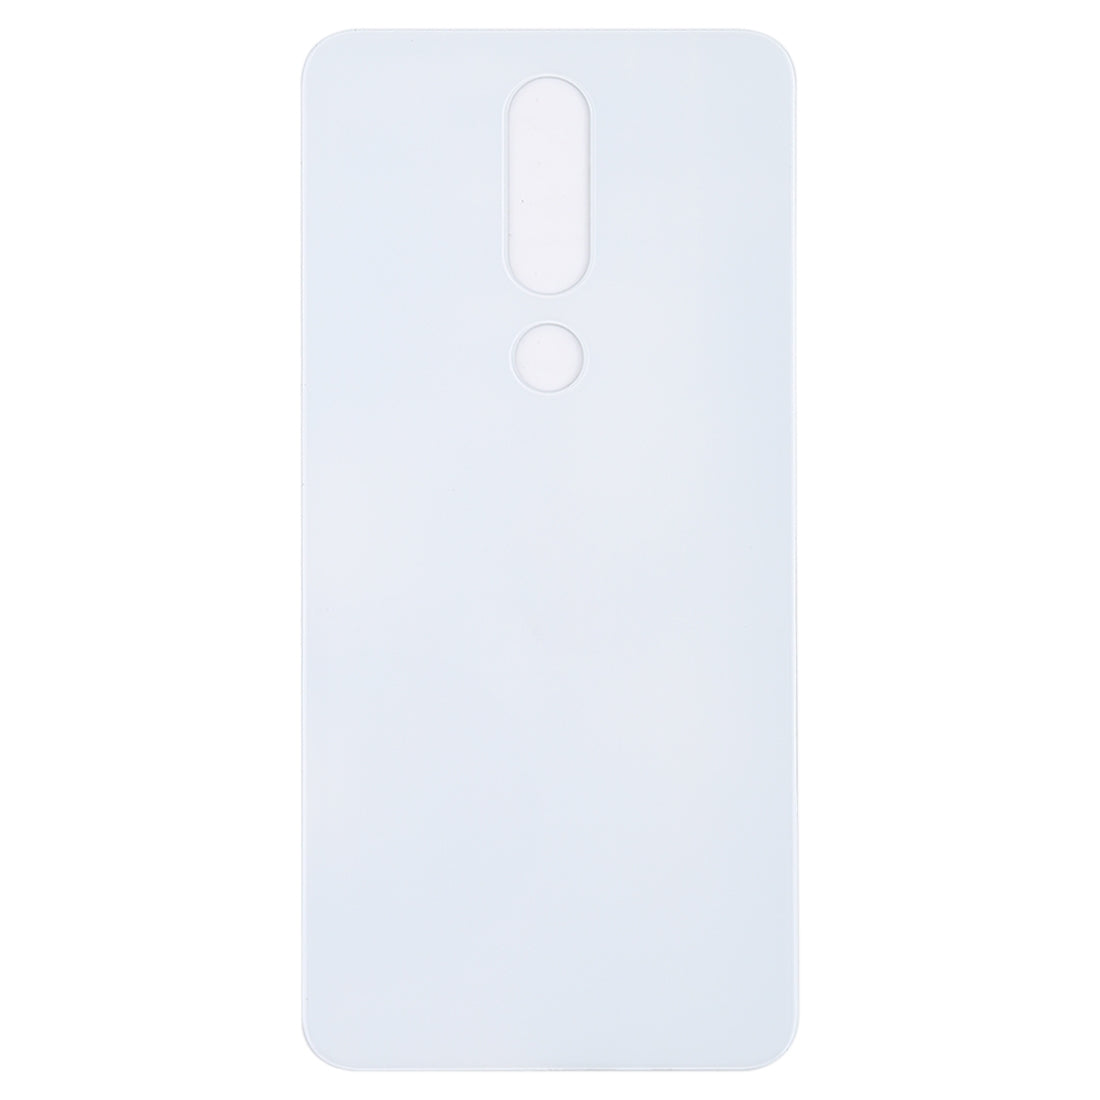 Tapa Bateria Back Cover Nokia X6 2018 Blanco